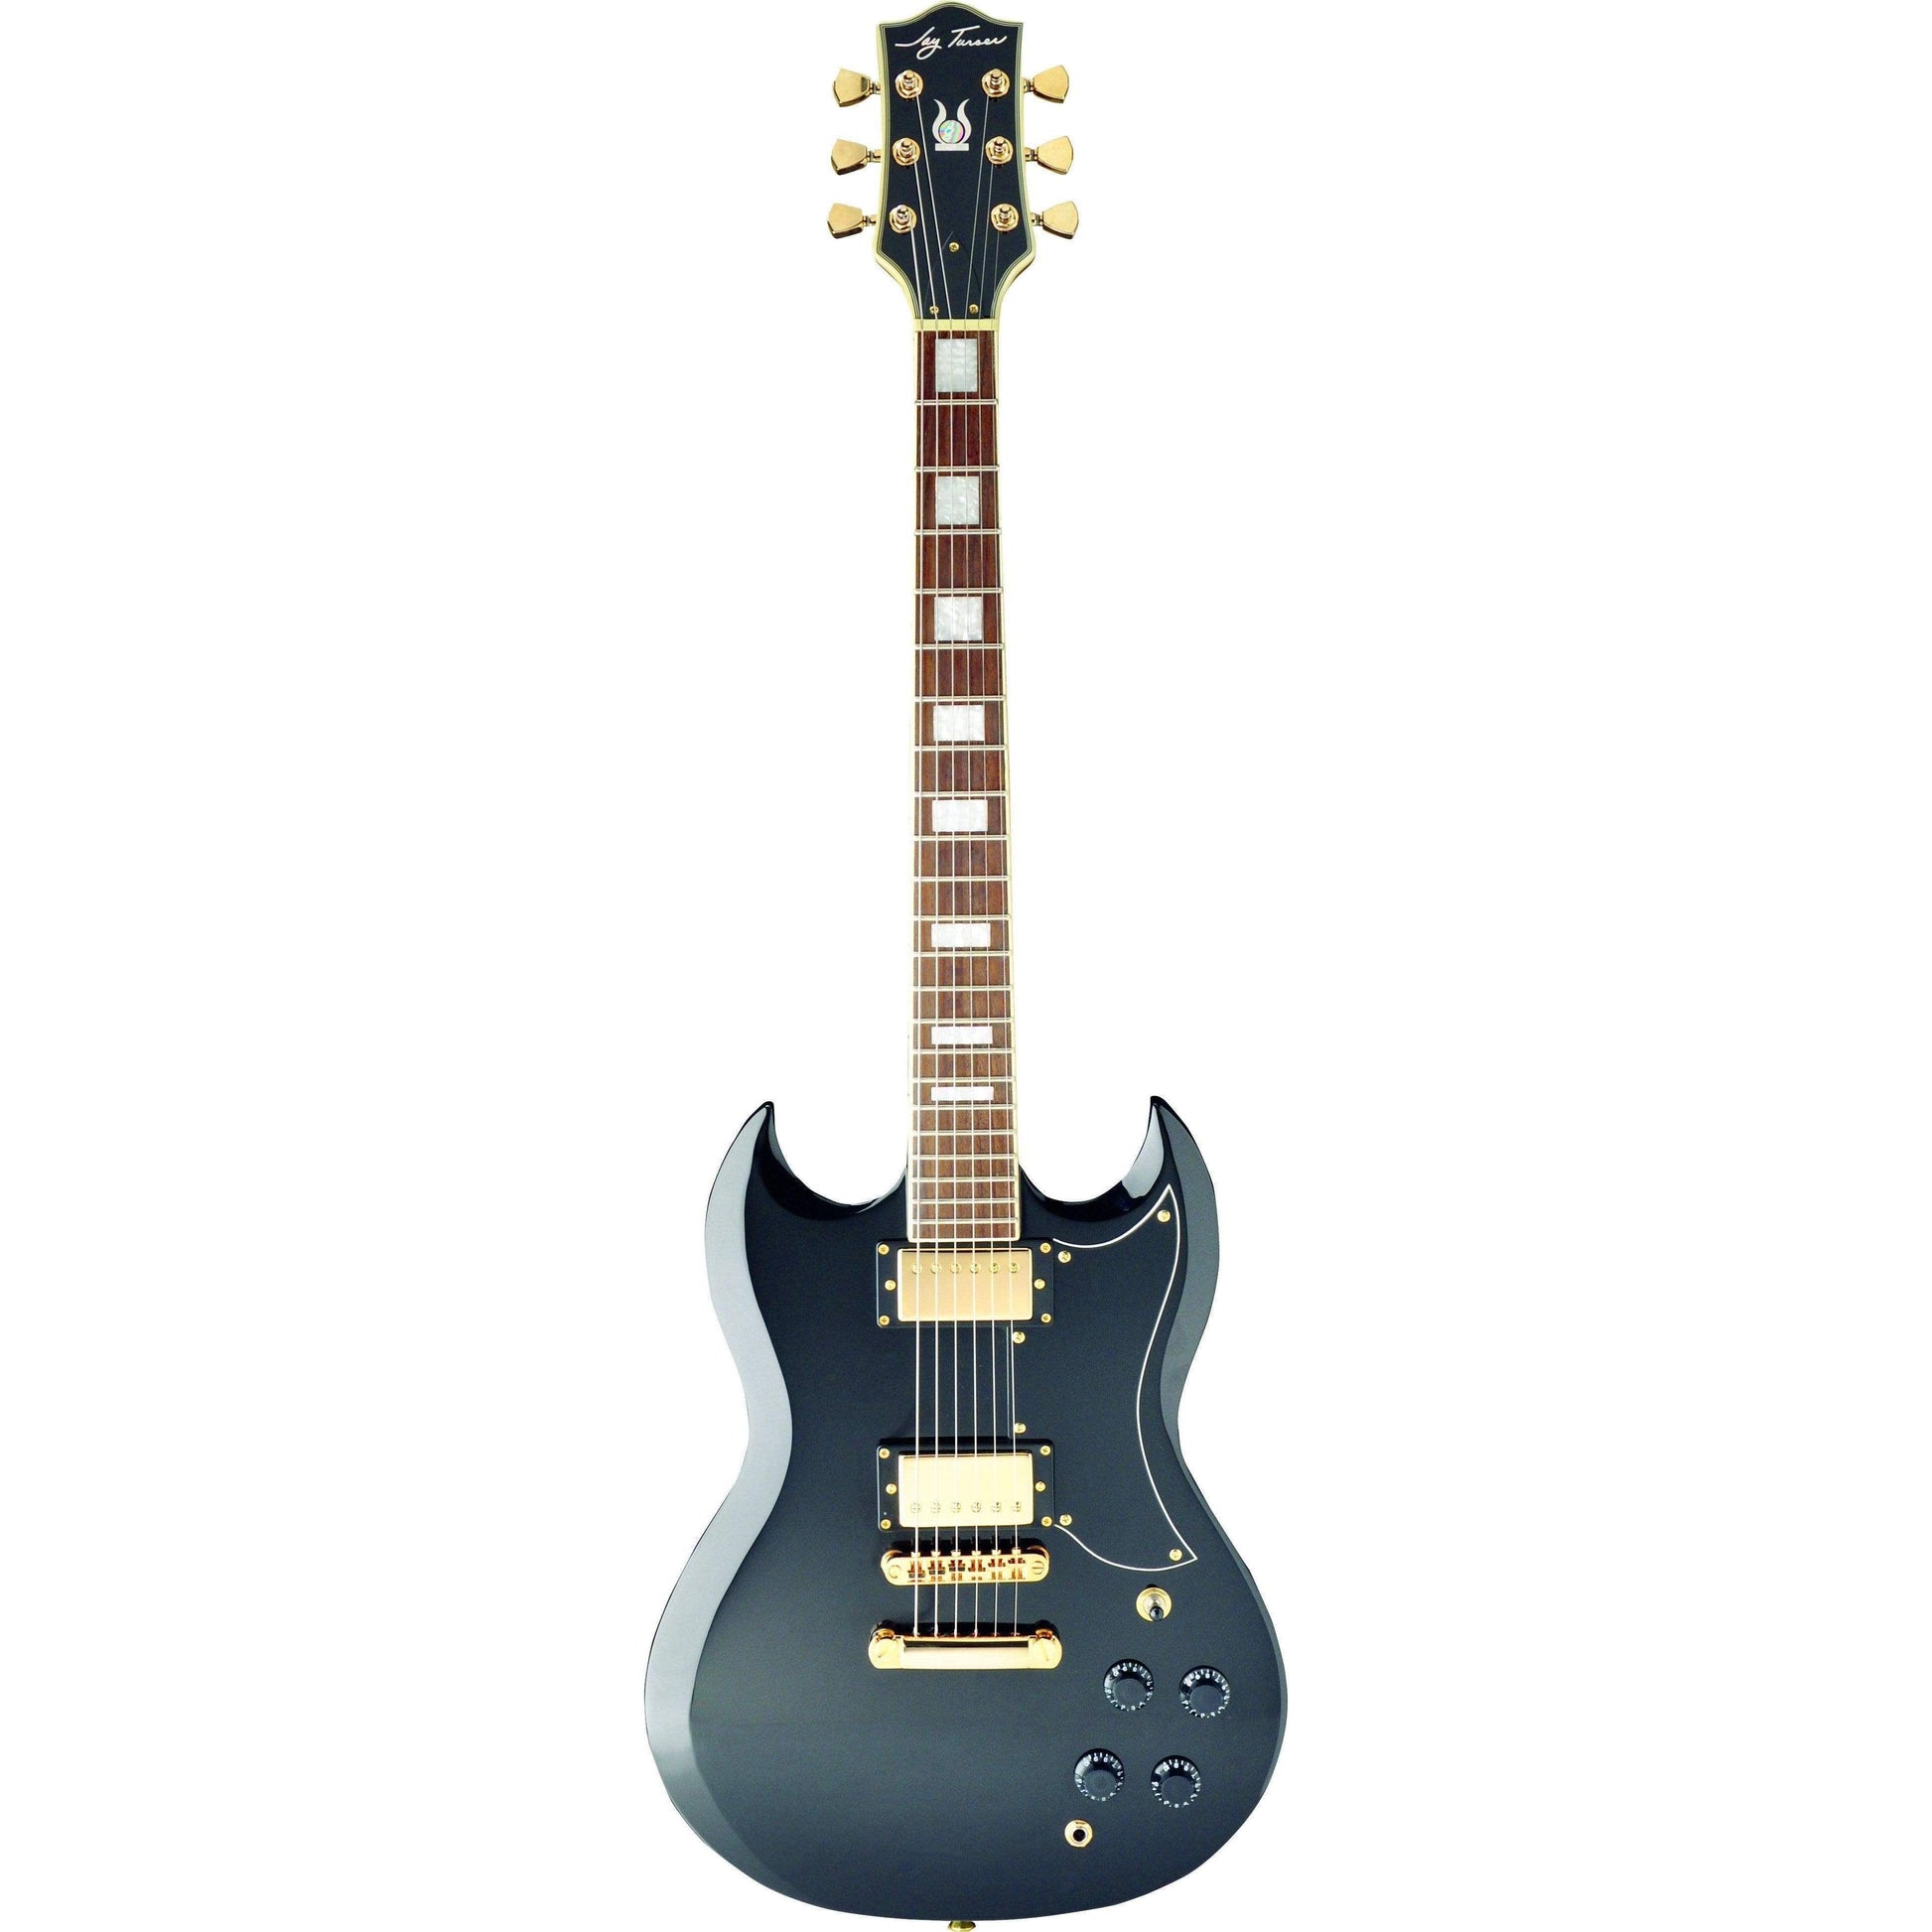 Jay Turser JT50CUSTOMBK Electric Guitar - Black